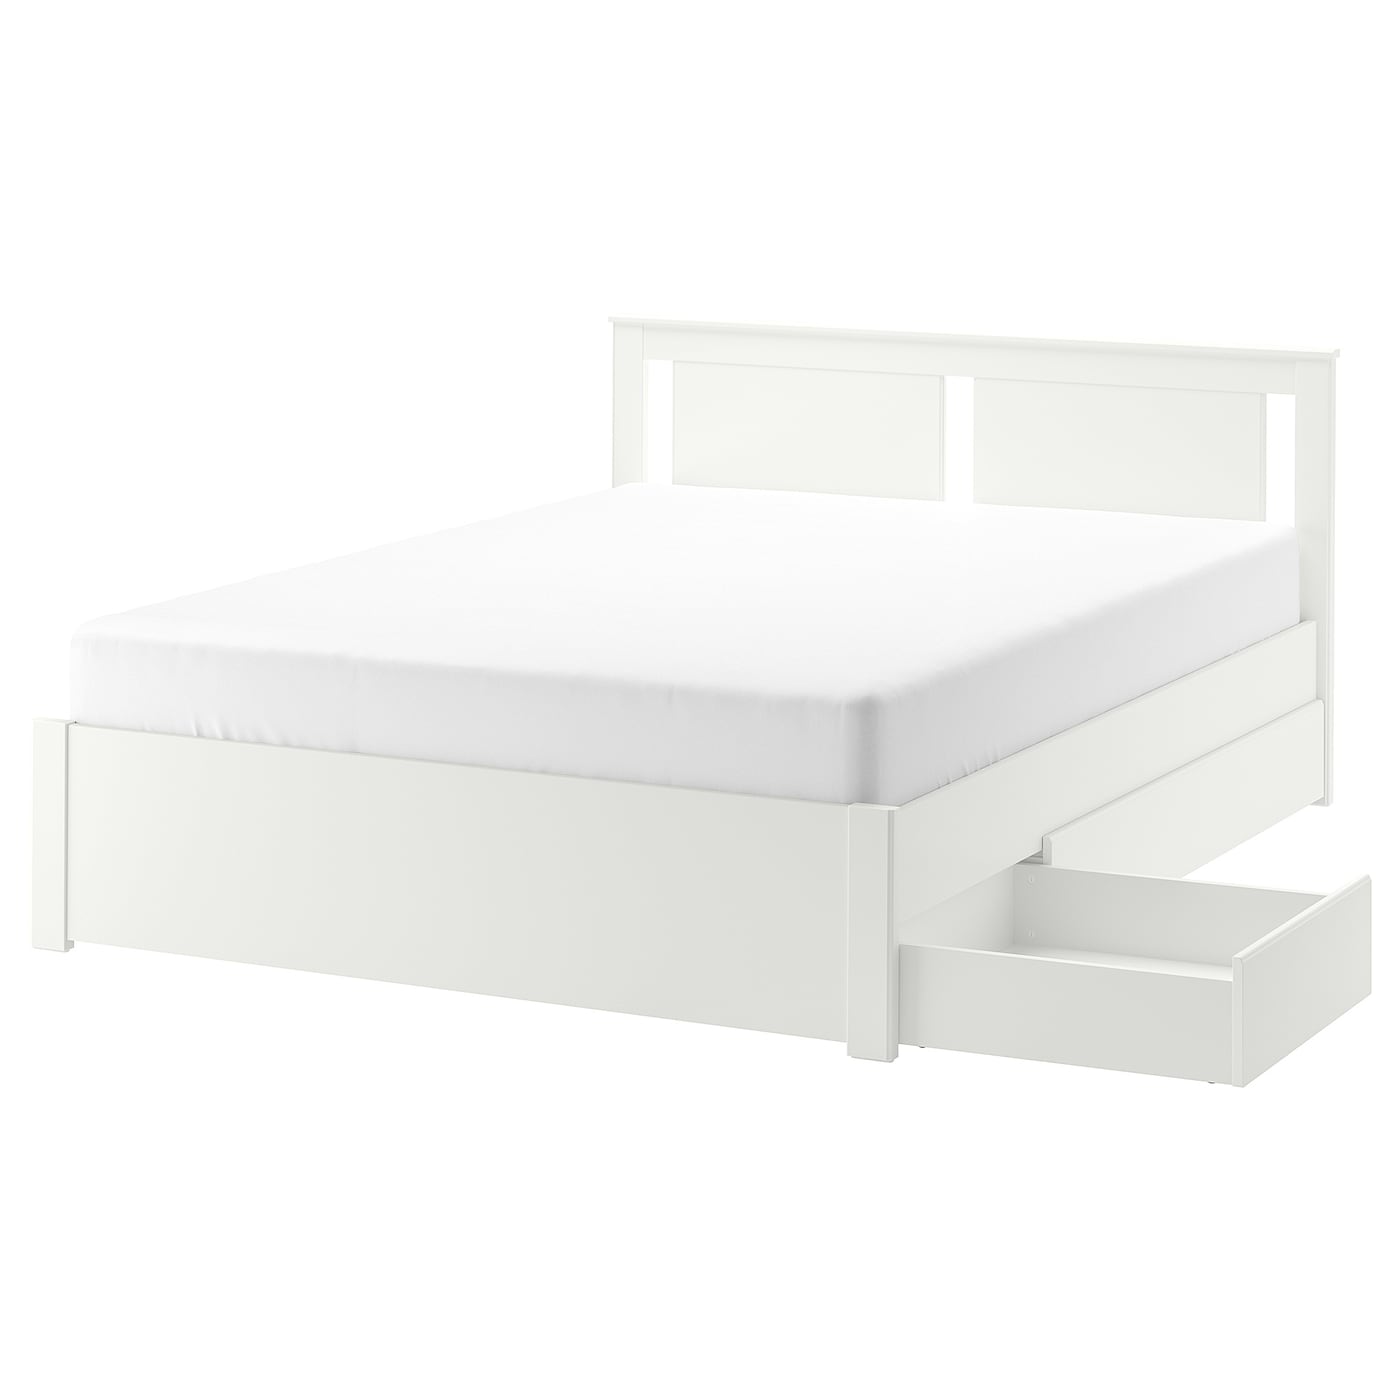 Каркас кровати с 2 ящиками для хранения - IKEA SONGESAND/LURÖY/LUROY, 200х160 см, белый, СОНГЕСАНД/ЛУРОЙ ИКЕА